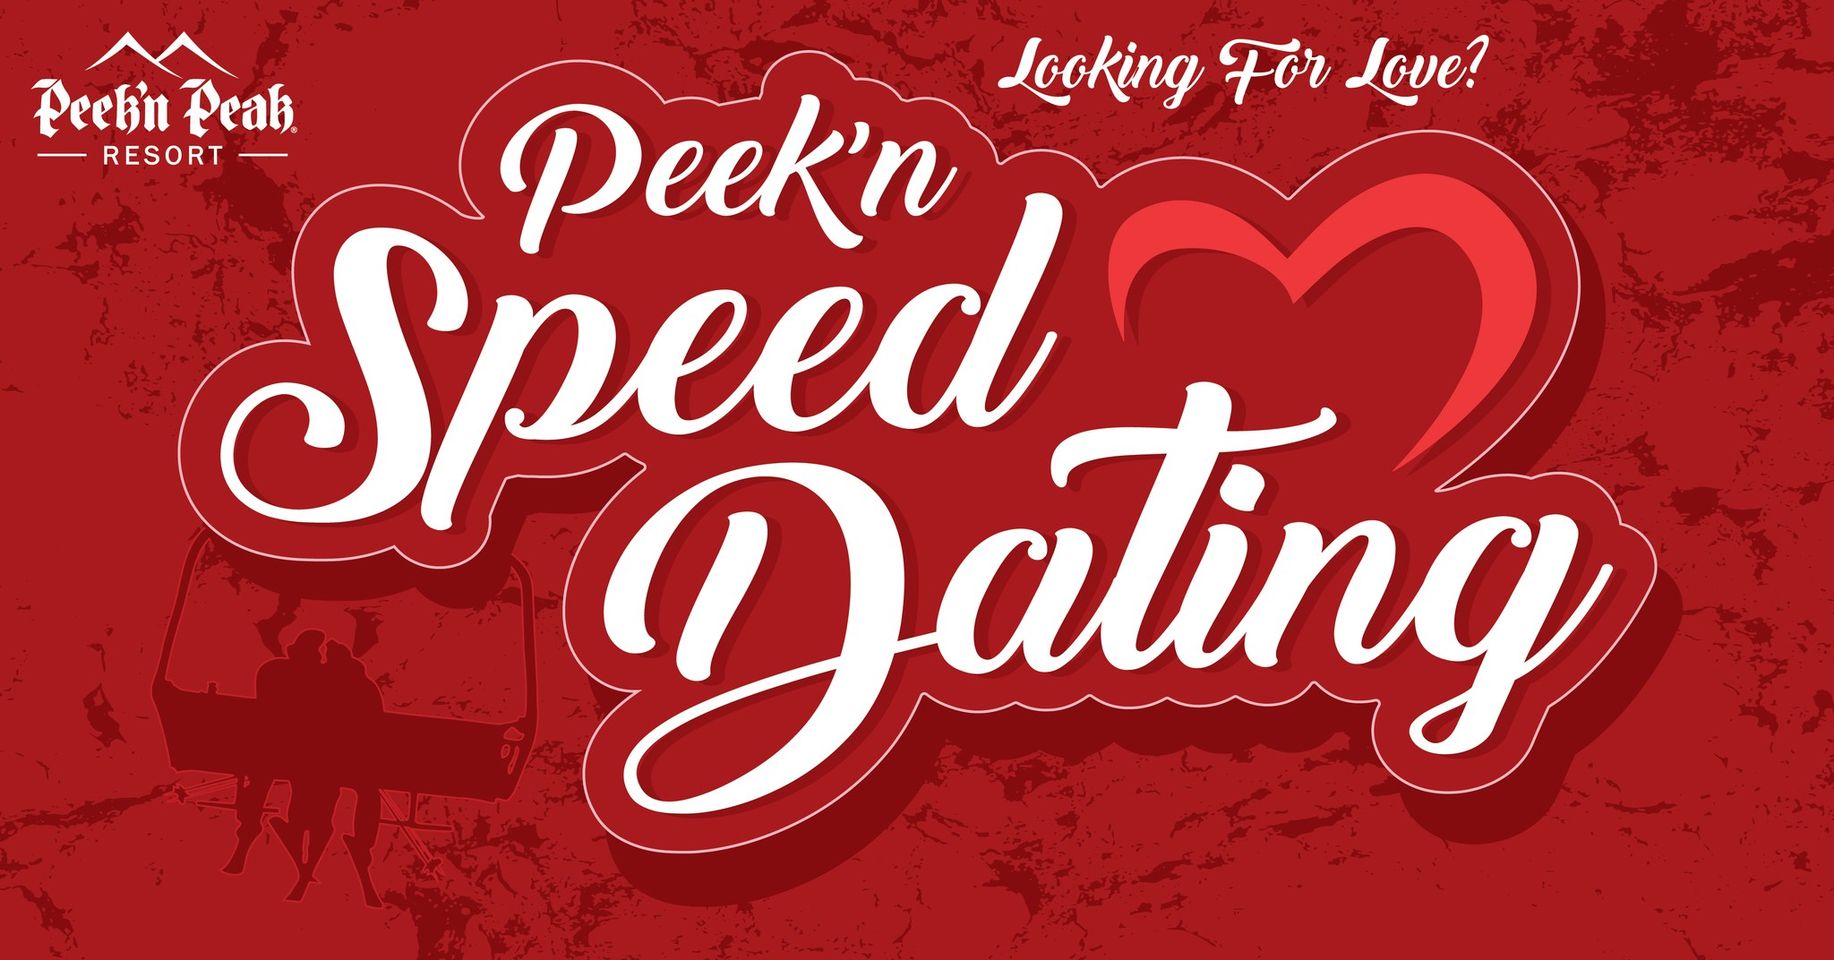 Peek'n Peak Resort to Host Speed Dating Event on Valentine's Day